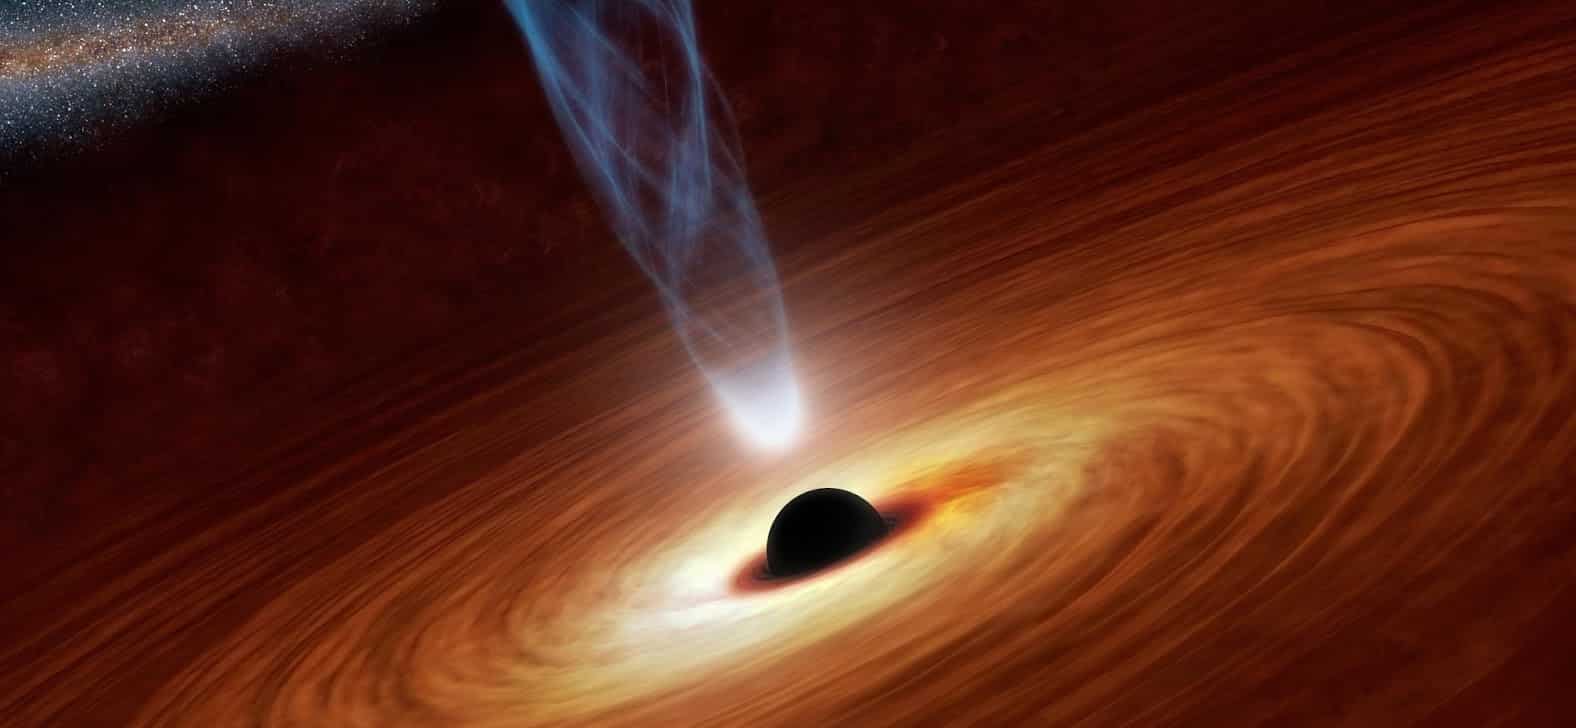 Pia16695 Blackhole Corona 20130227 E1460711986448 مجلة نقطة العلمية